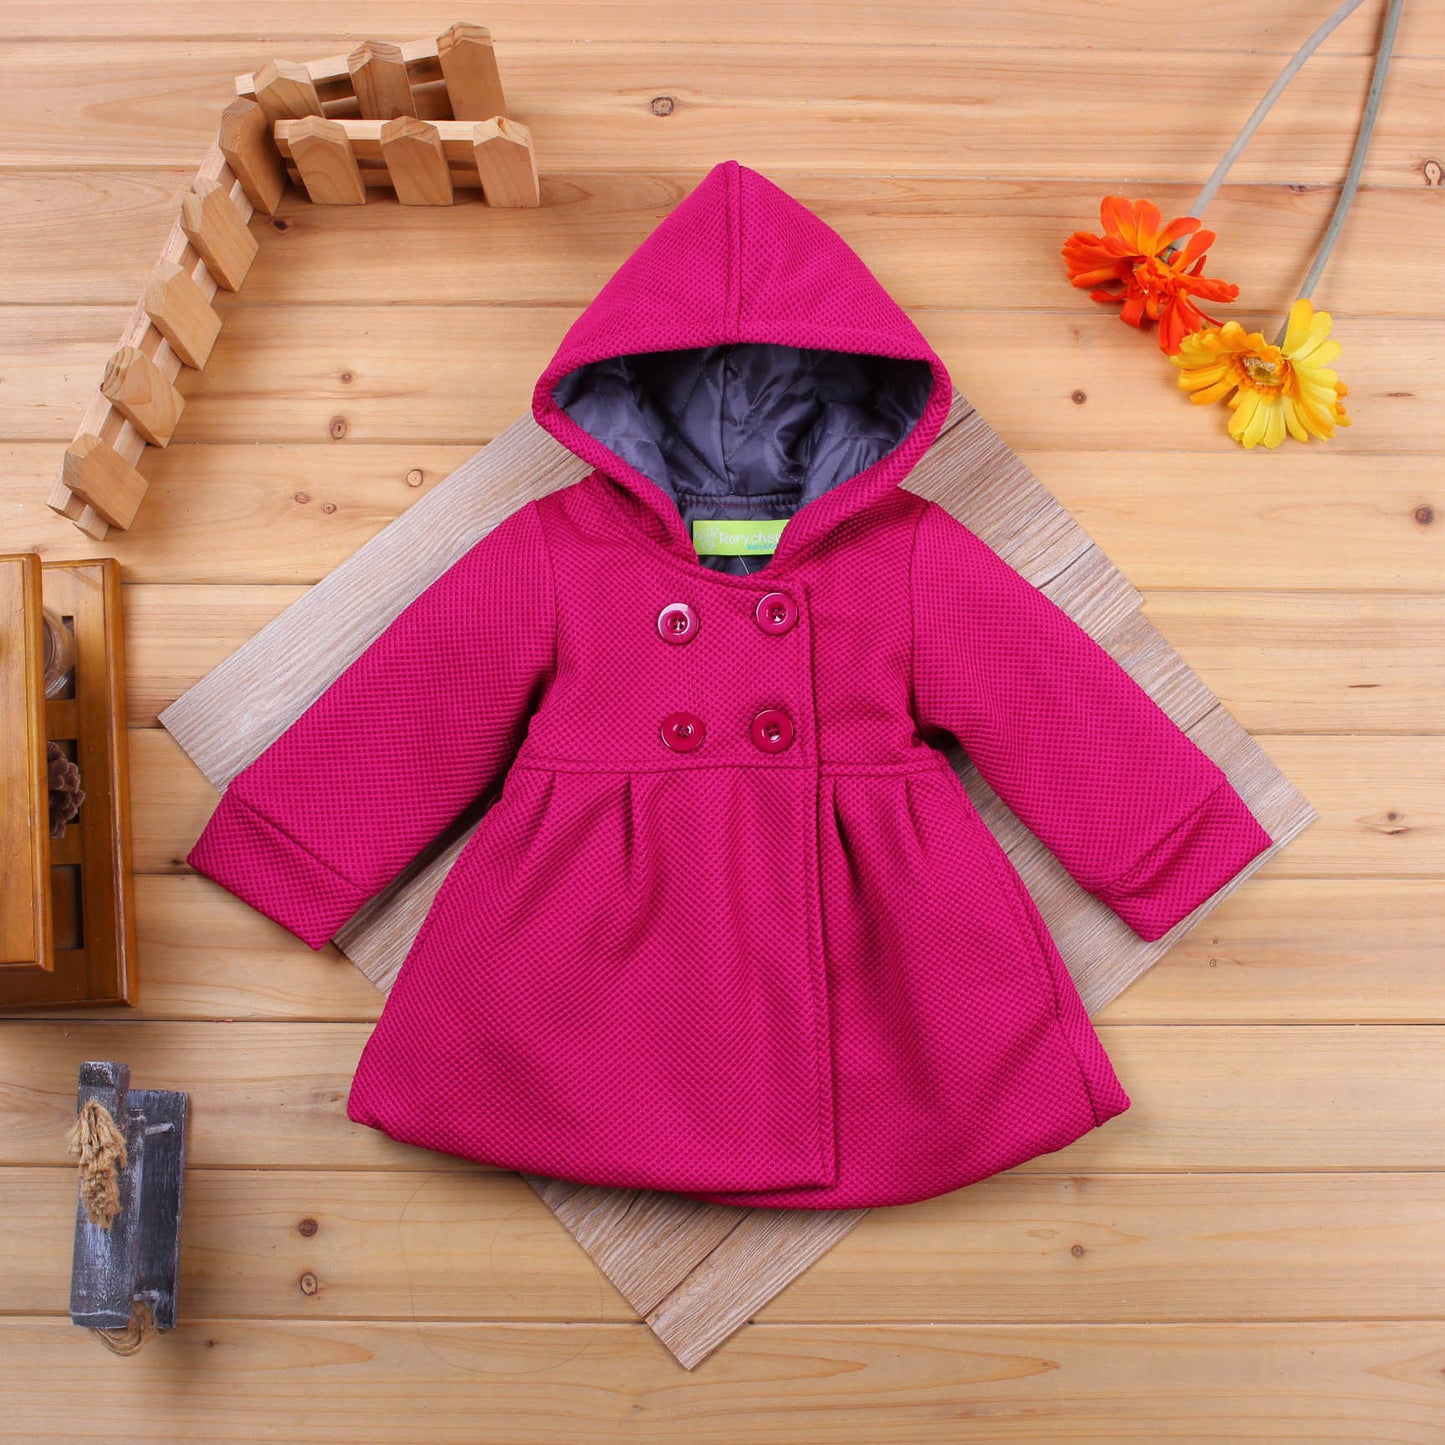 Kiethleen Winter Coat | Winter new little girl child Korean version of the baby wear warm coat hooded jacket 3 colors